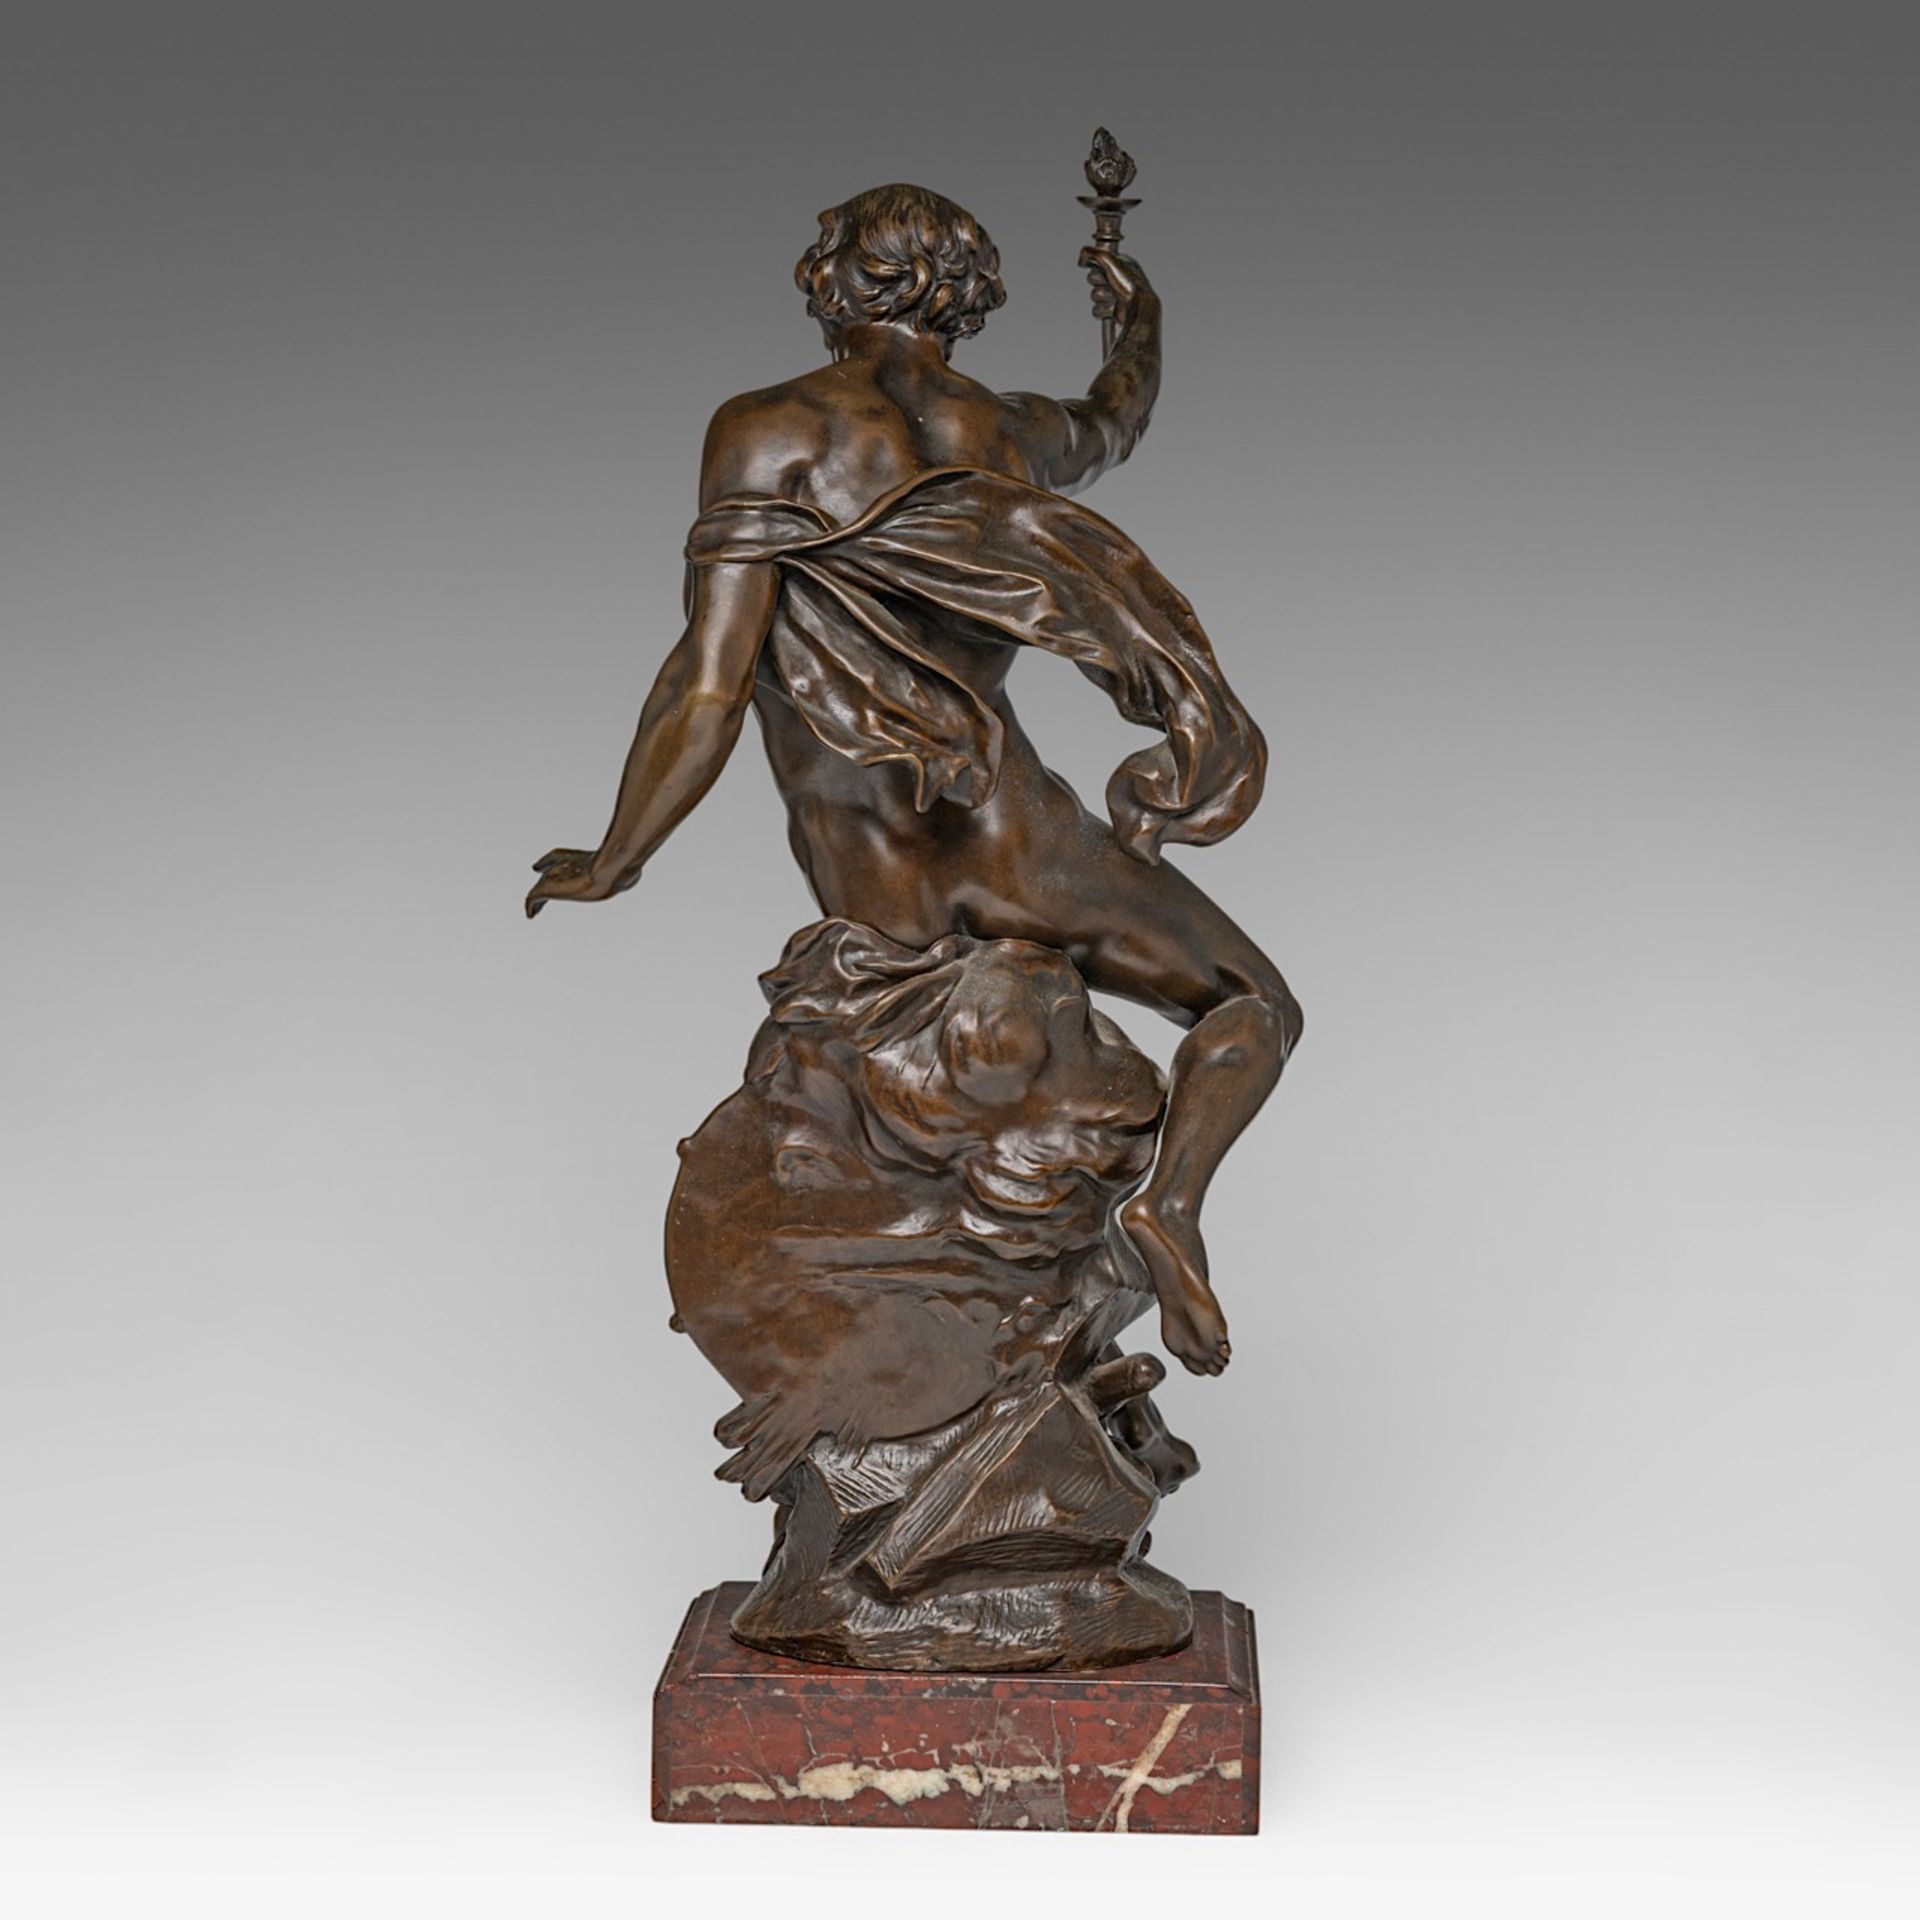 Emile Louis Picault (1833-1915), 'Excelsior', patinated bronze, H 61 cm - Image 4 of 8